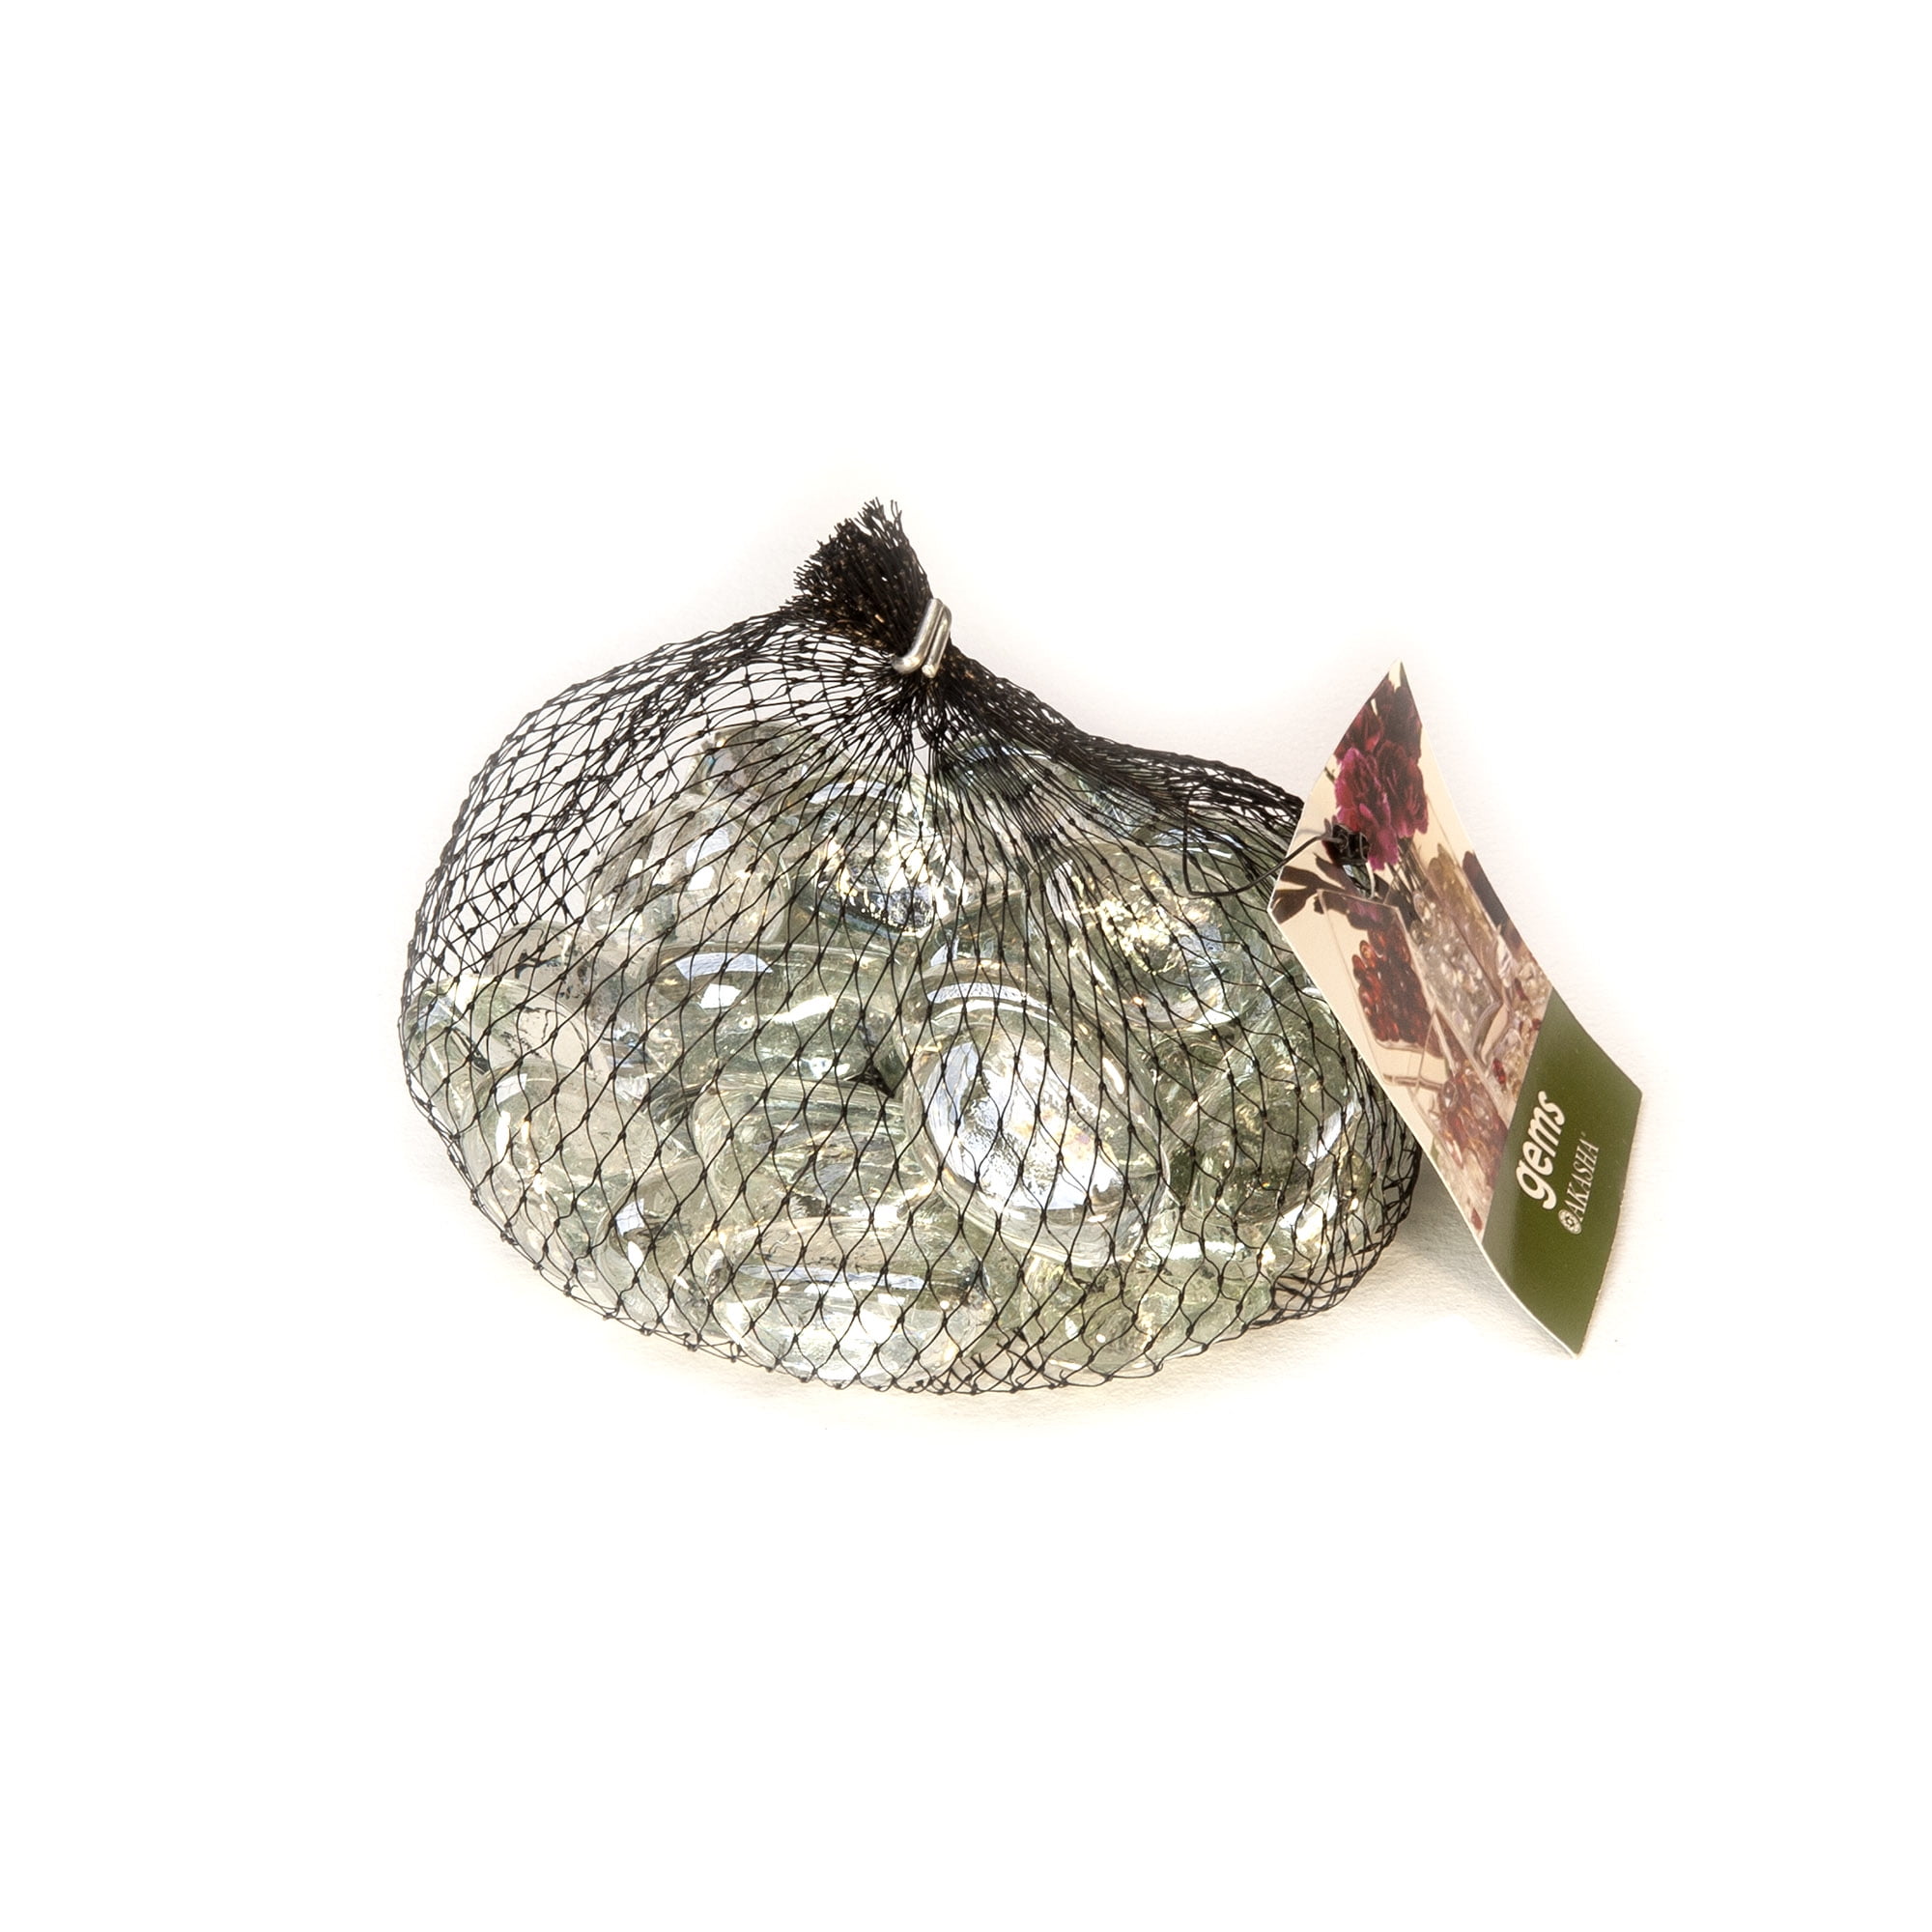 Small Clear Glass Gems (3/4 lb bag)* – Inspire-Create